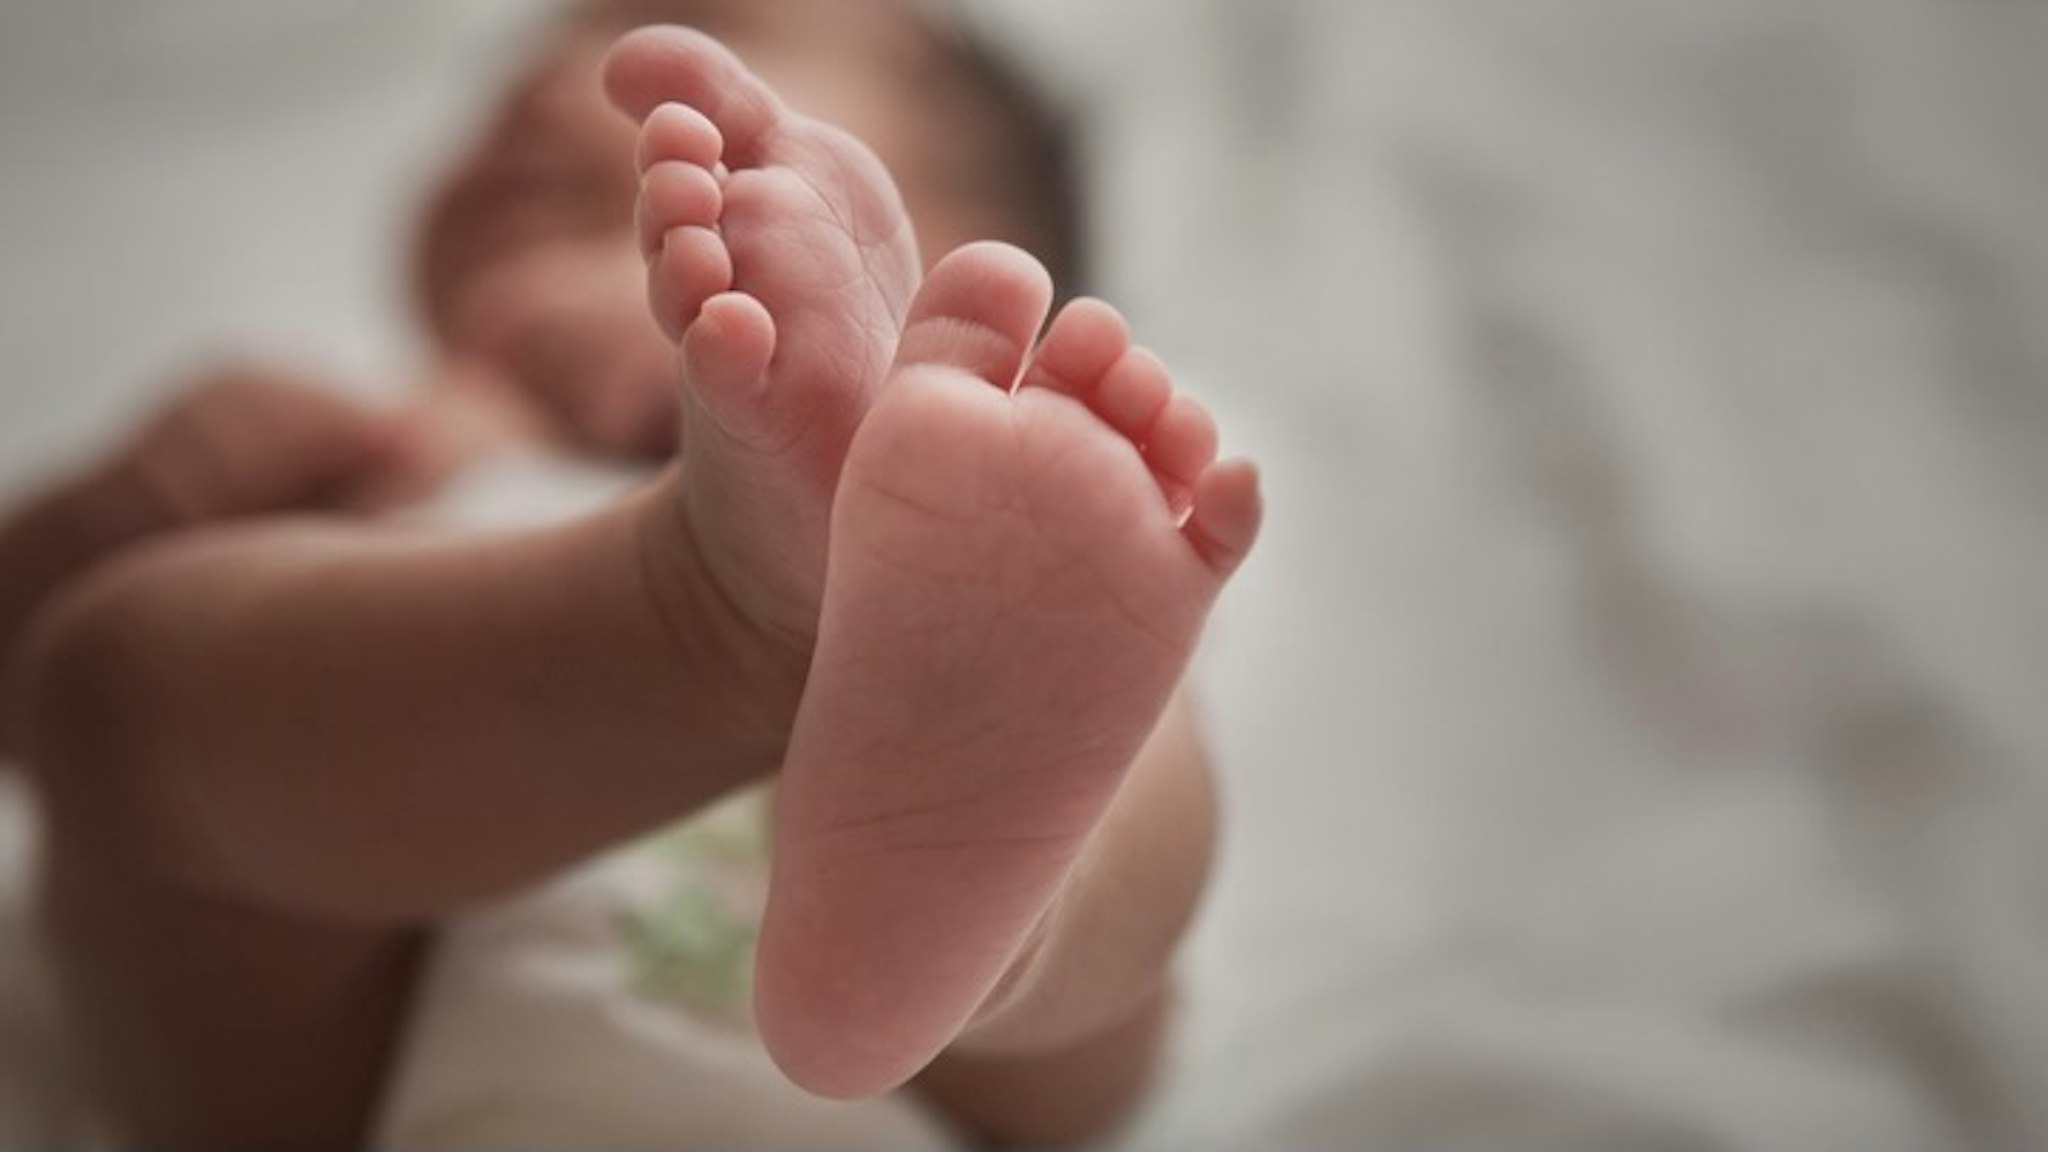 Close up of mixed race newborn baby girl's feet - stock photo Jose Luis Pelaez Inc via Getty Images